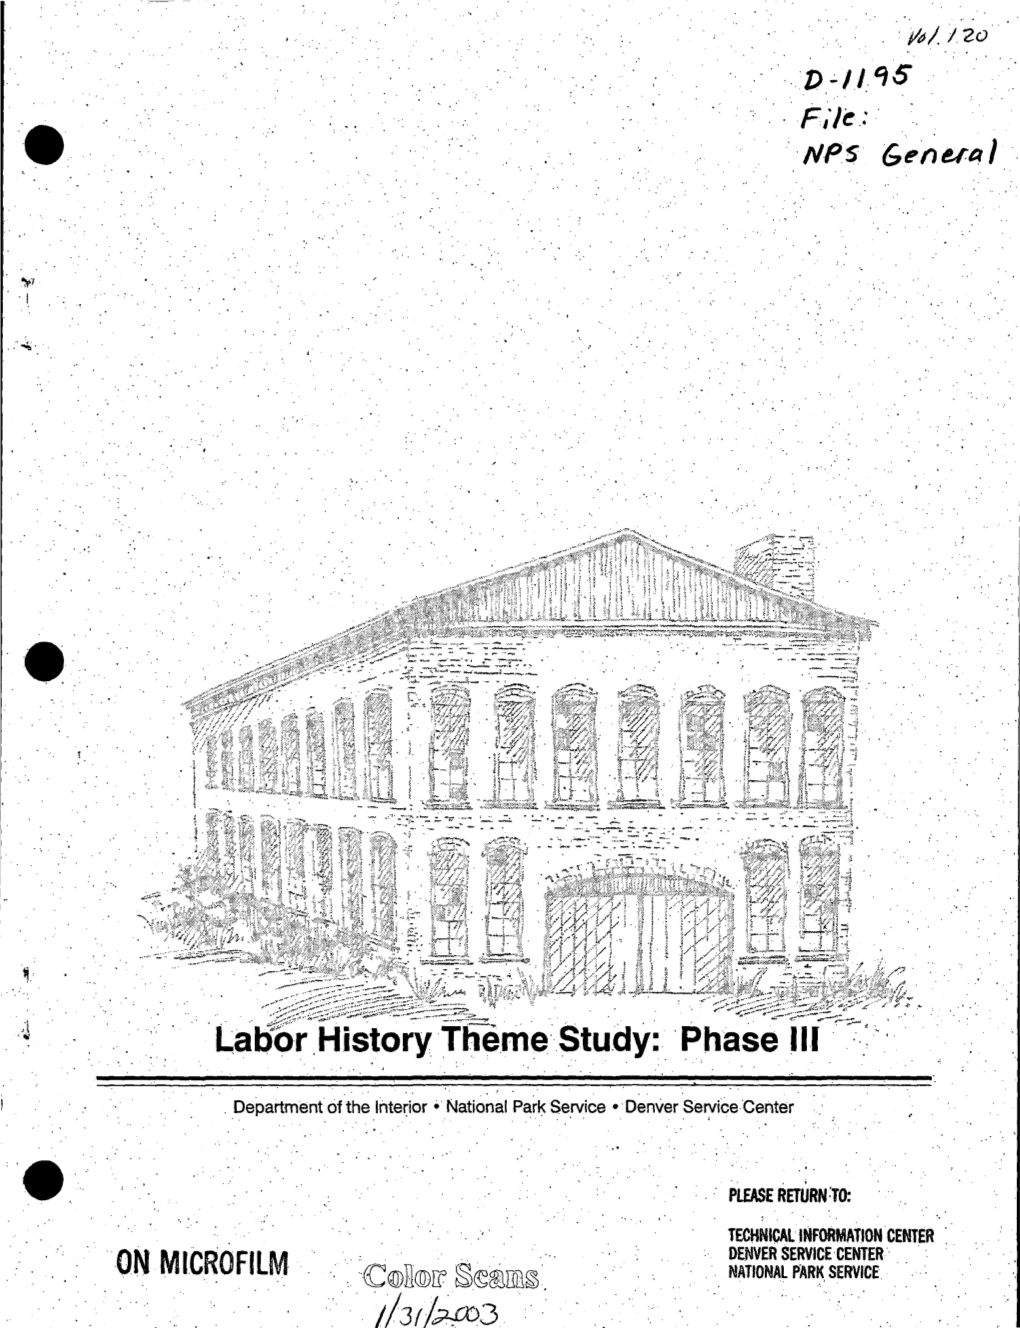 Labor History Theme Study: Phase Ill